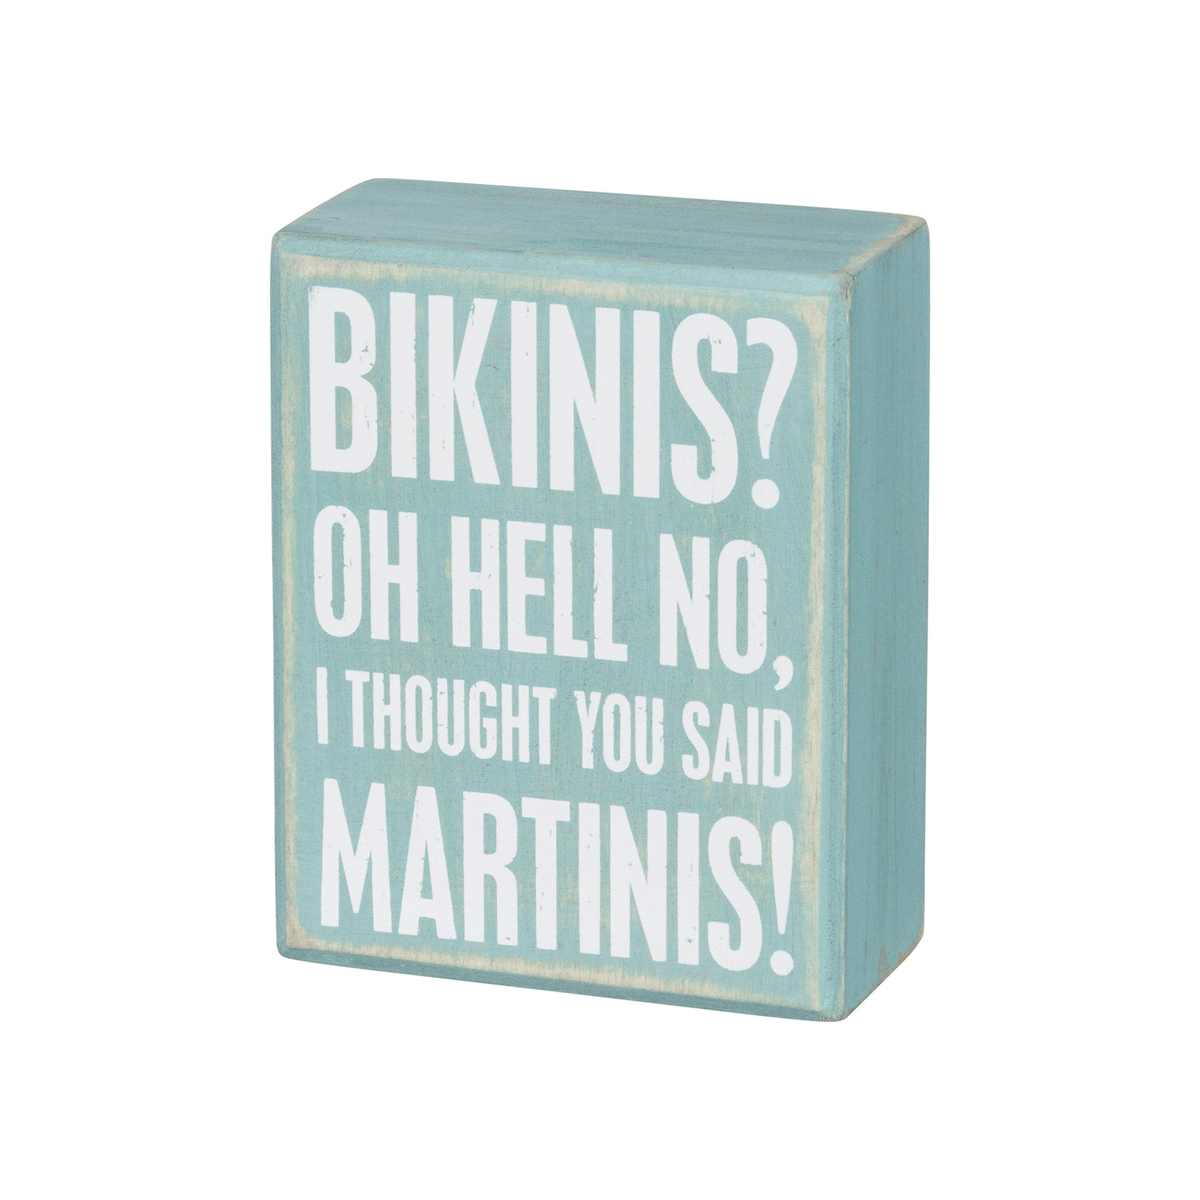 Bikinis & Martinis Box Sign - Signs & More